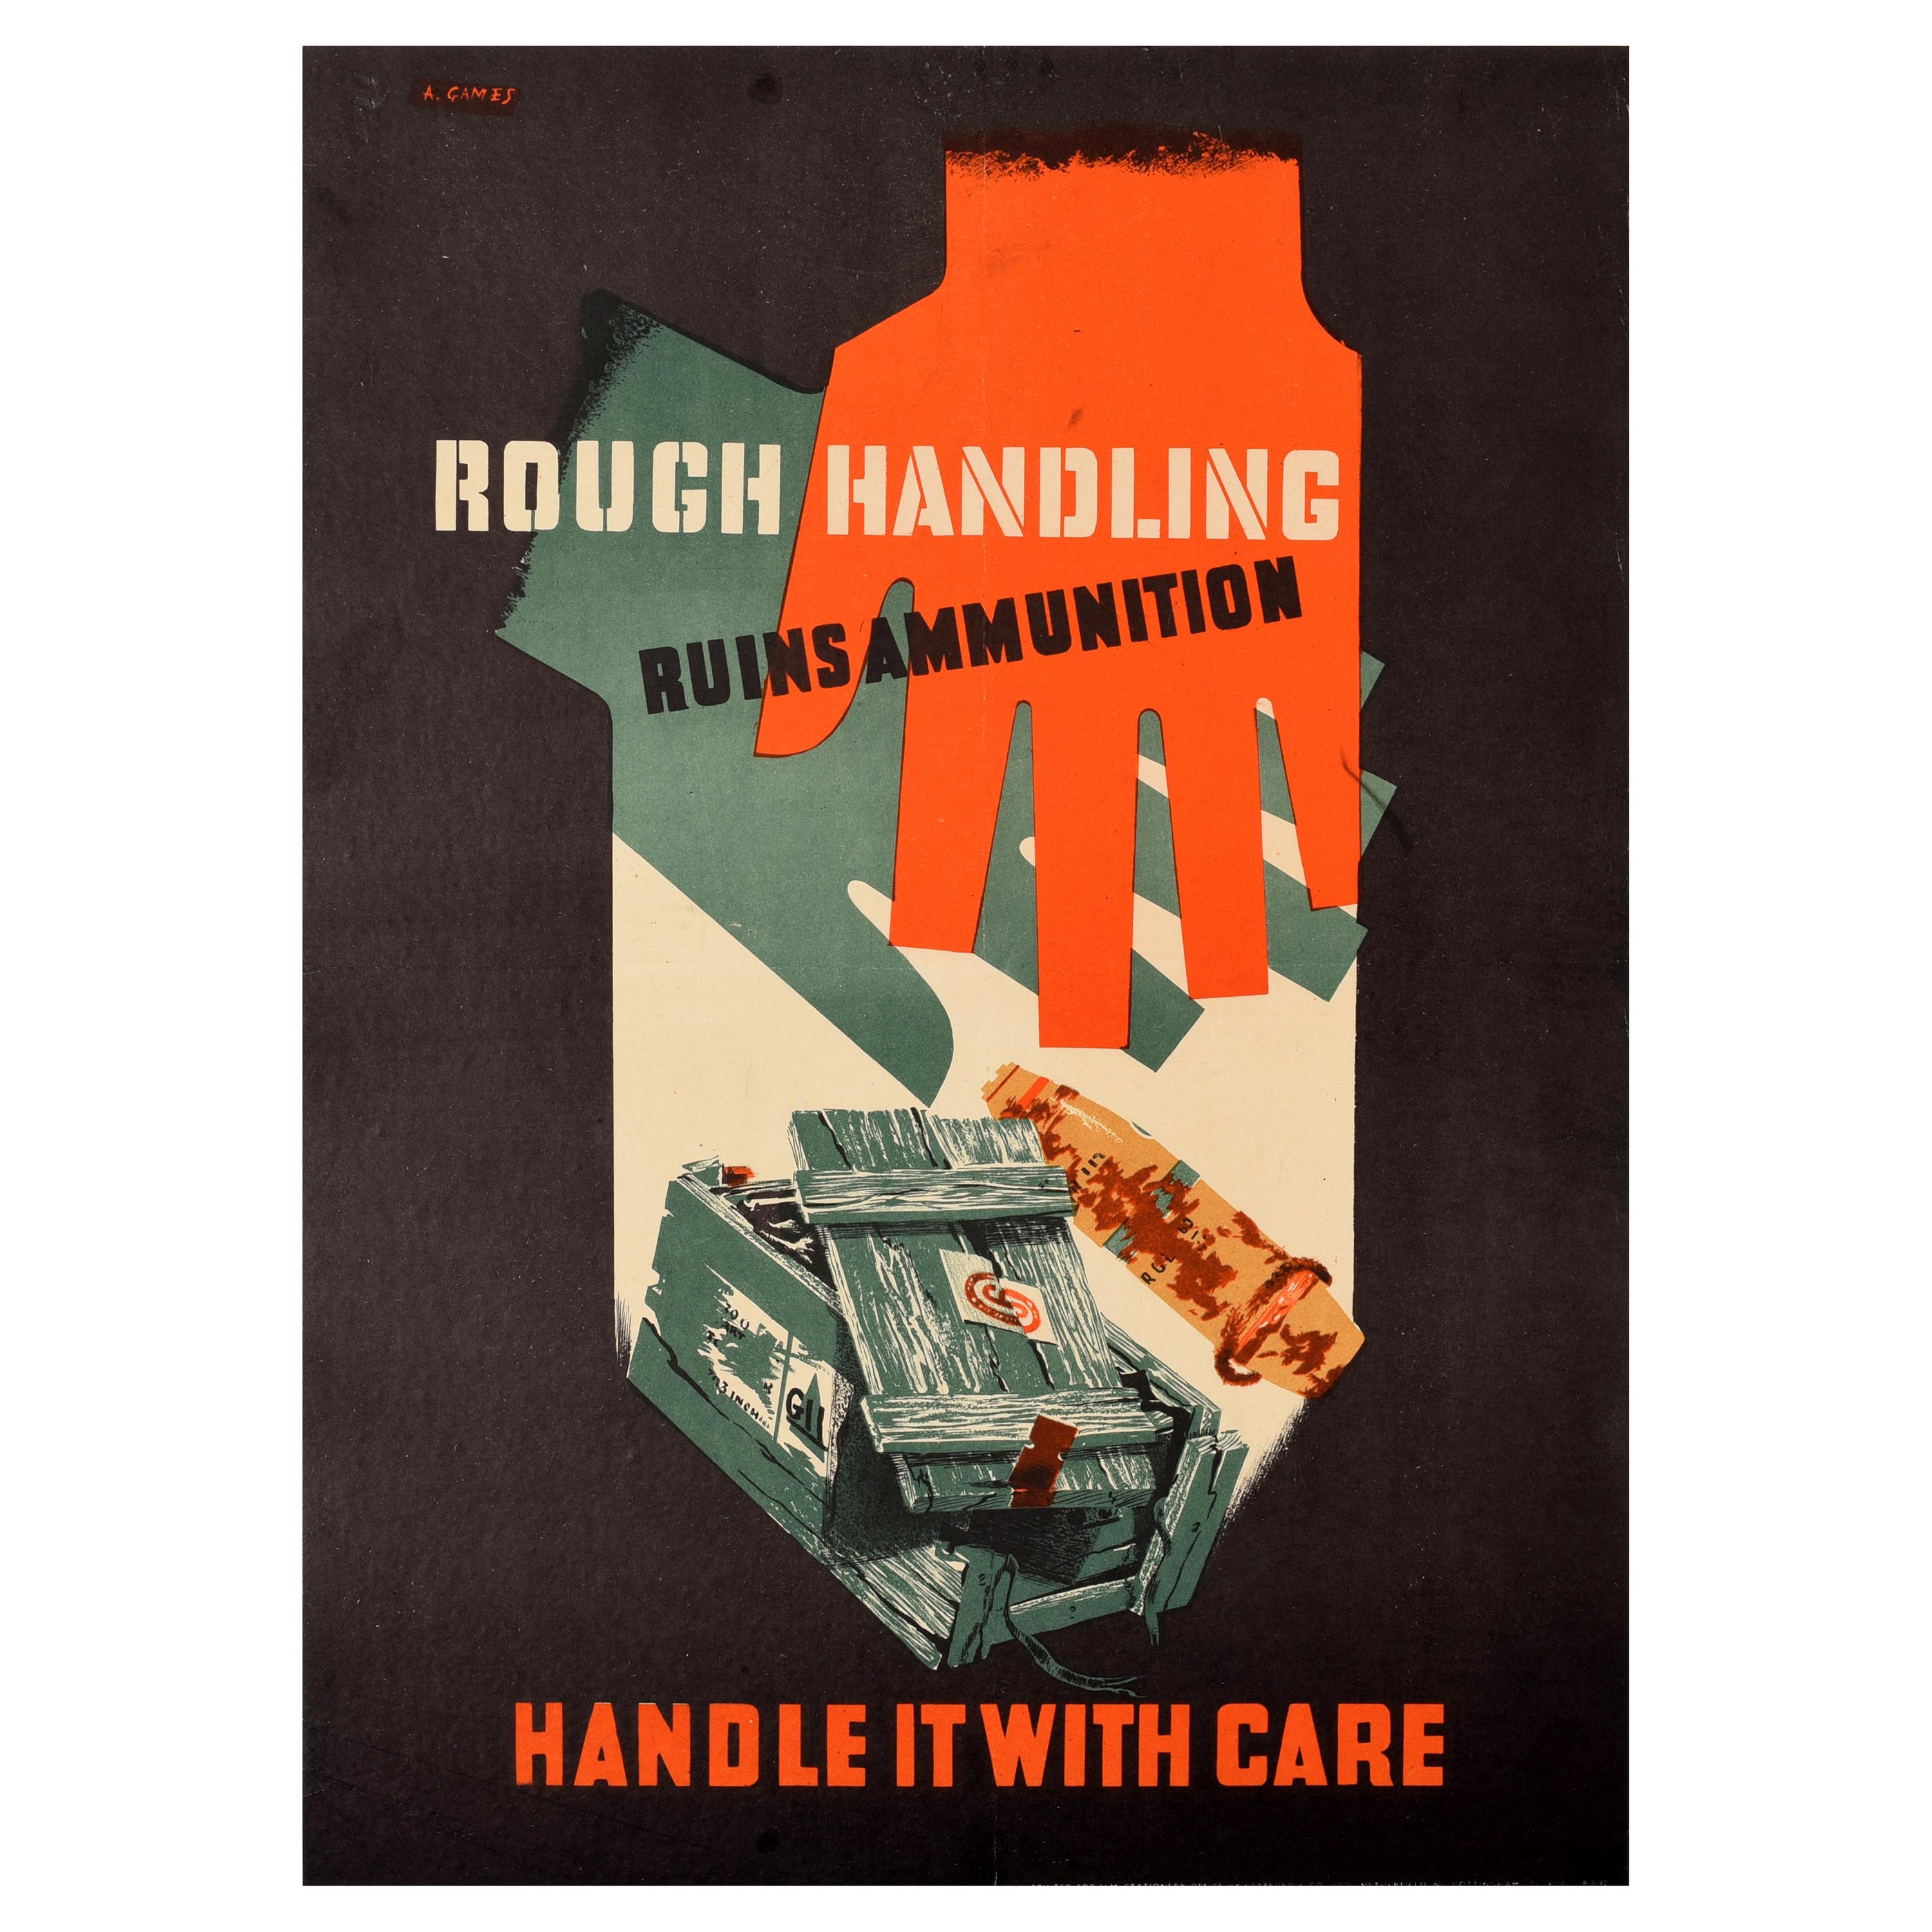 Original Vintage WWII Poster Rough Handling Ruins Ammunition Safety Care Warning (anglais seulement) en vente